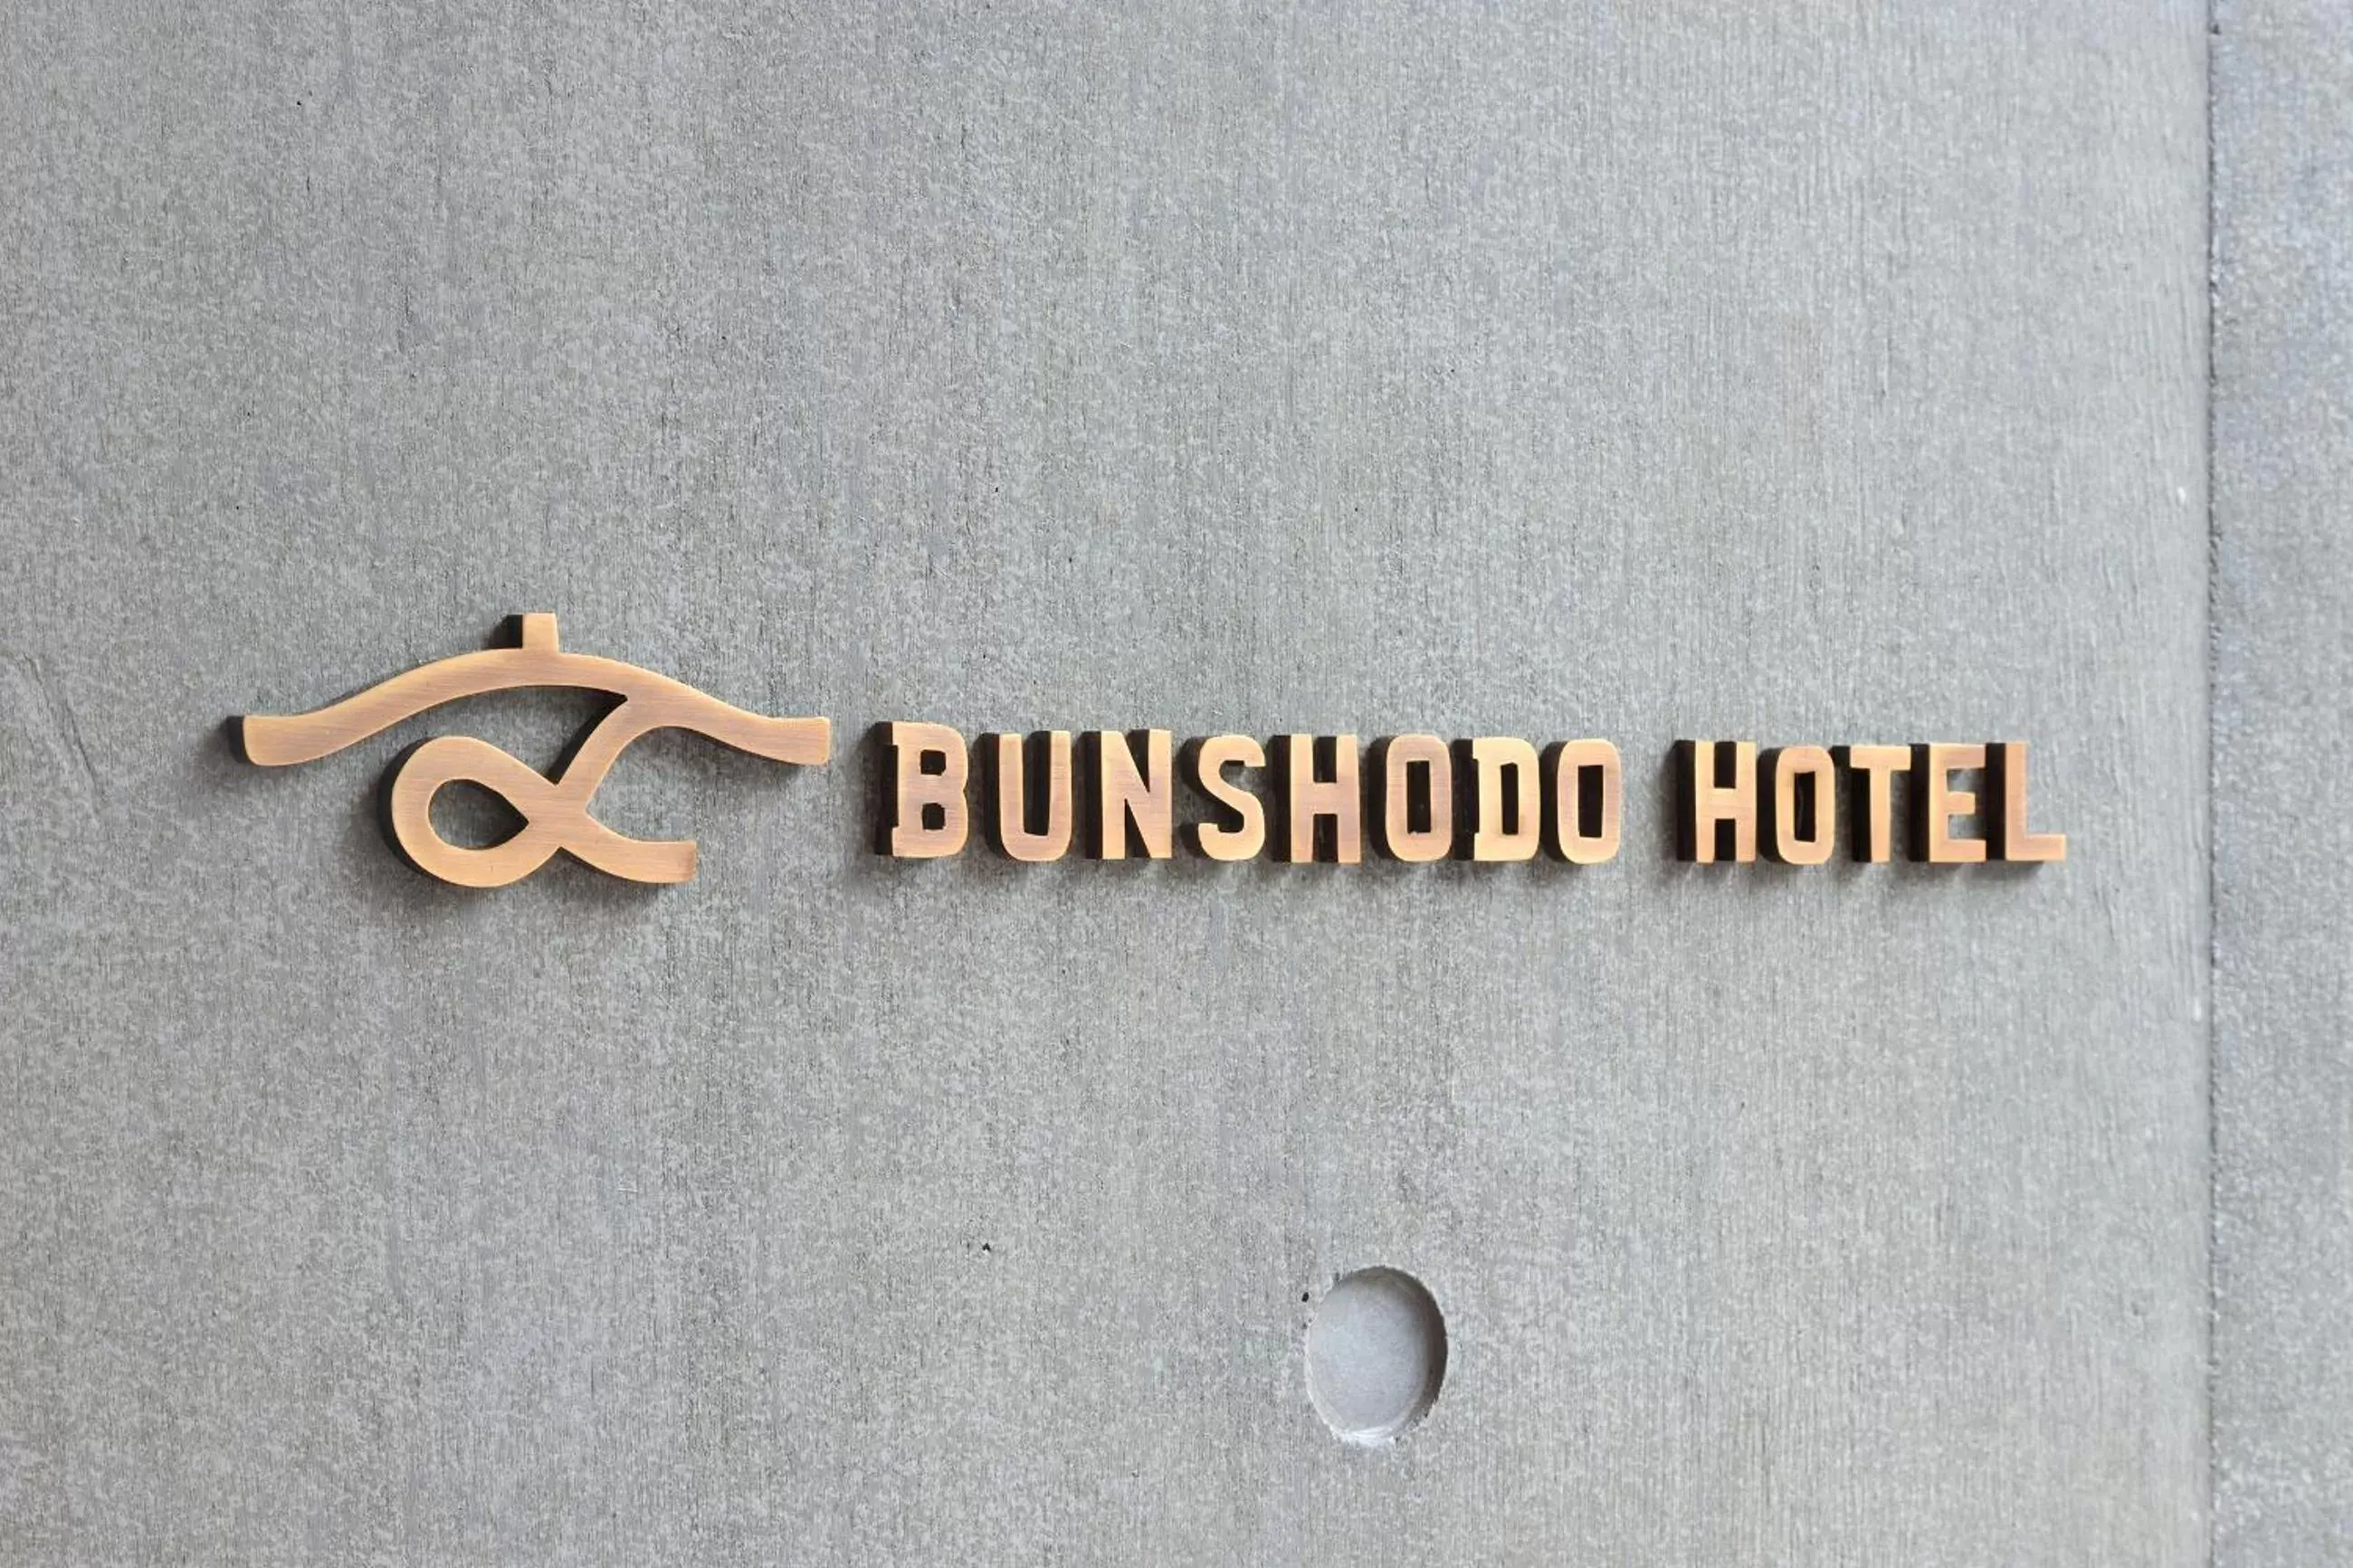 Property logo or sign in BUNSHODO HOTEL